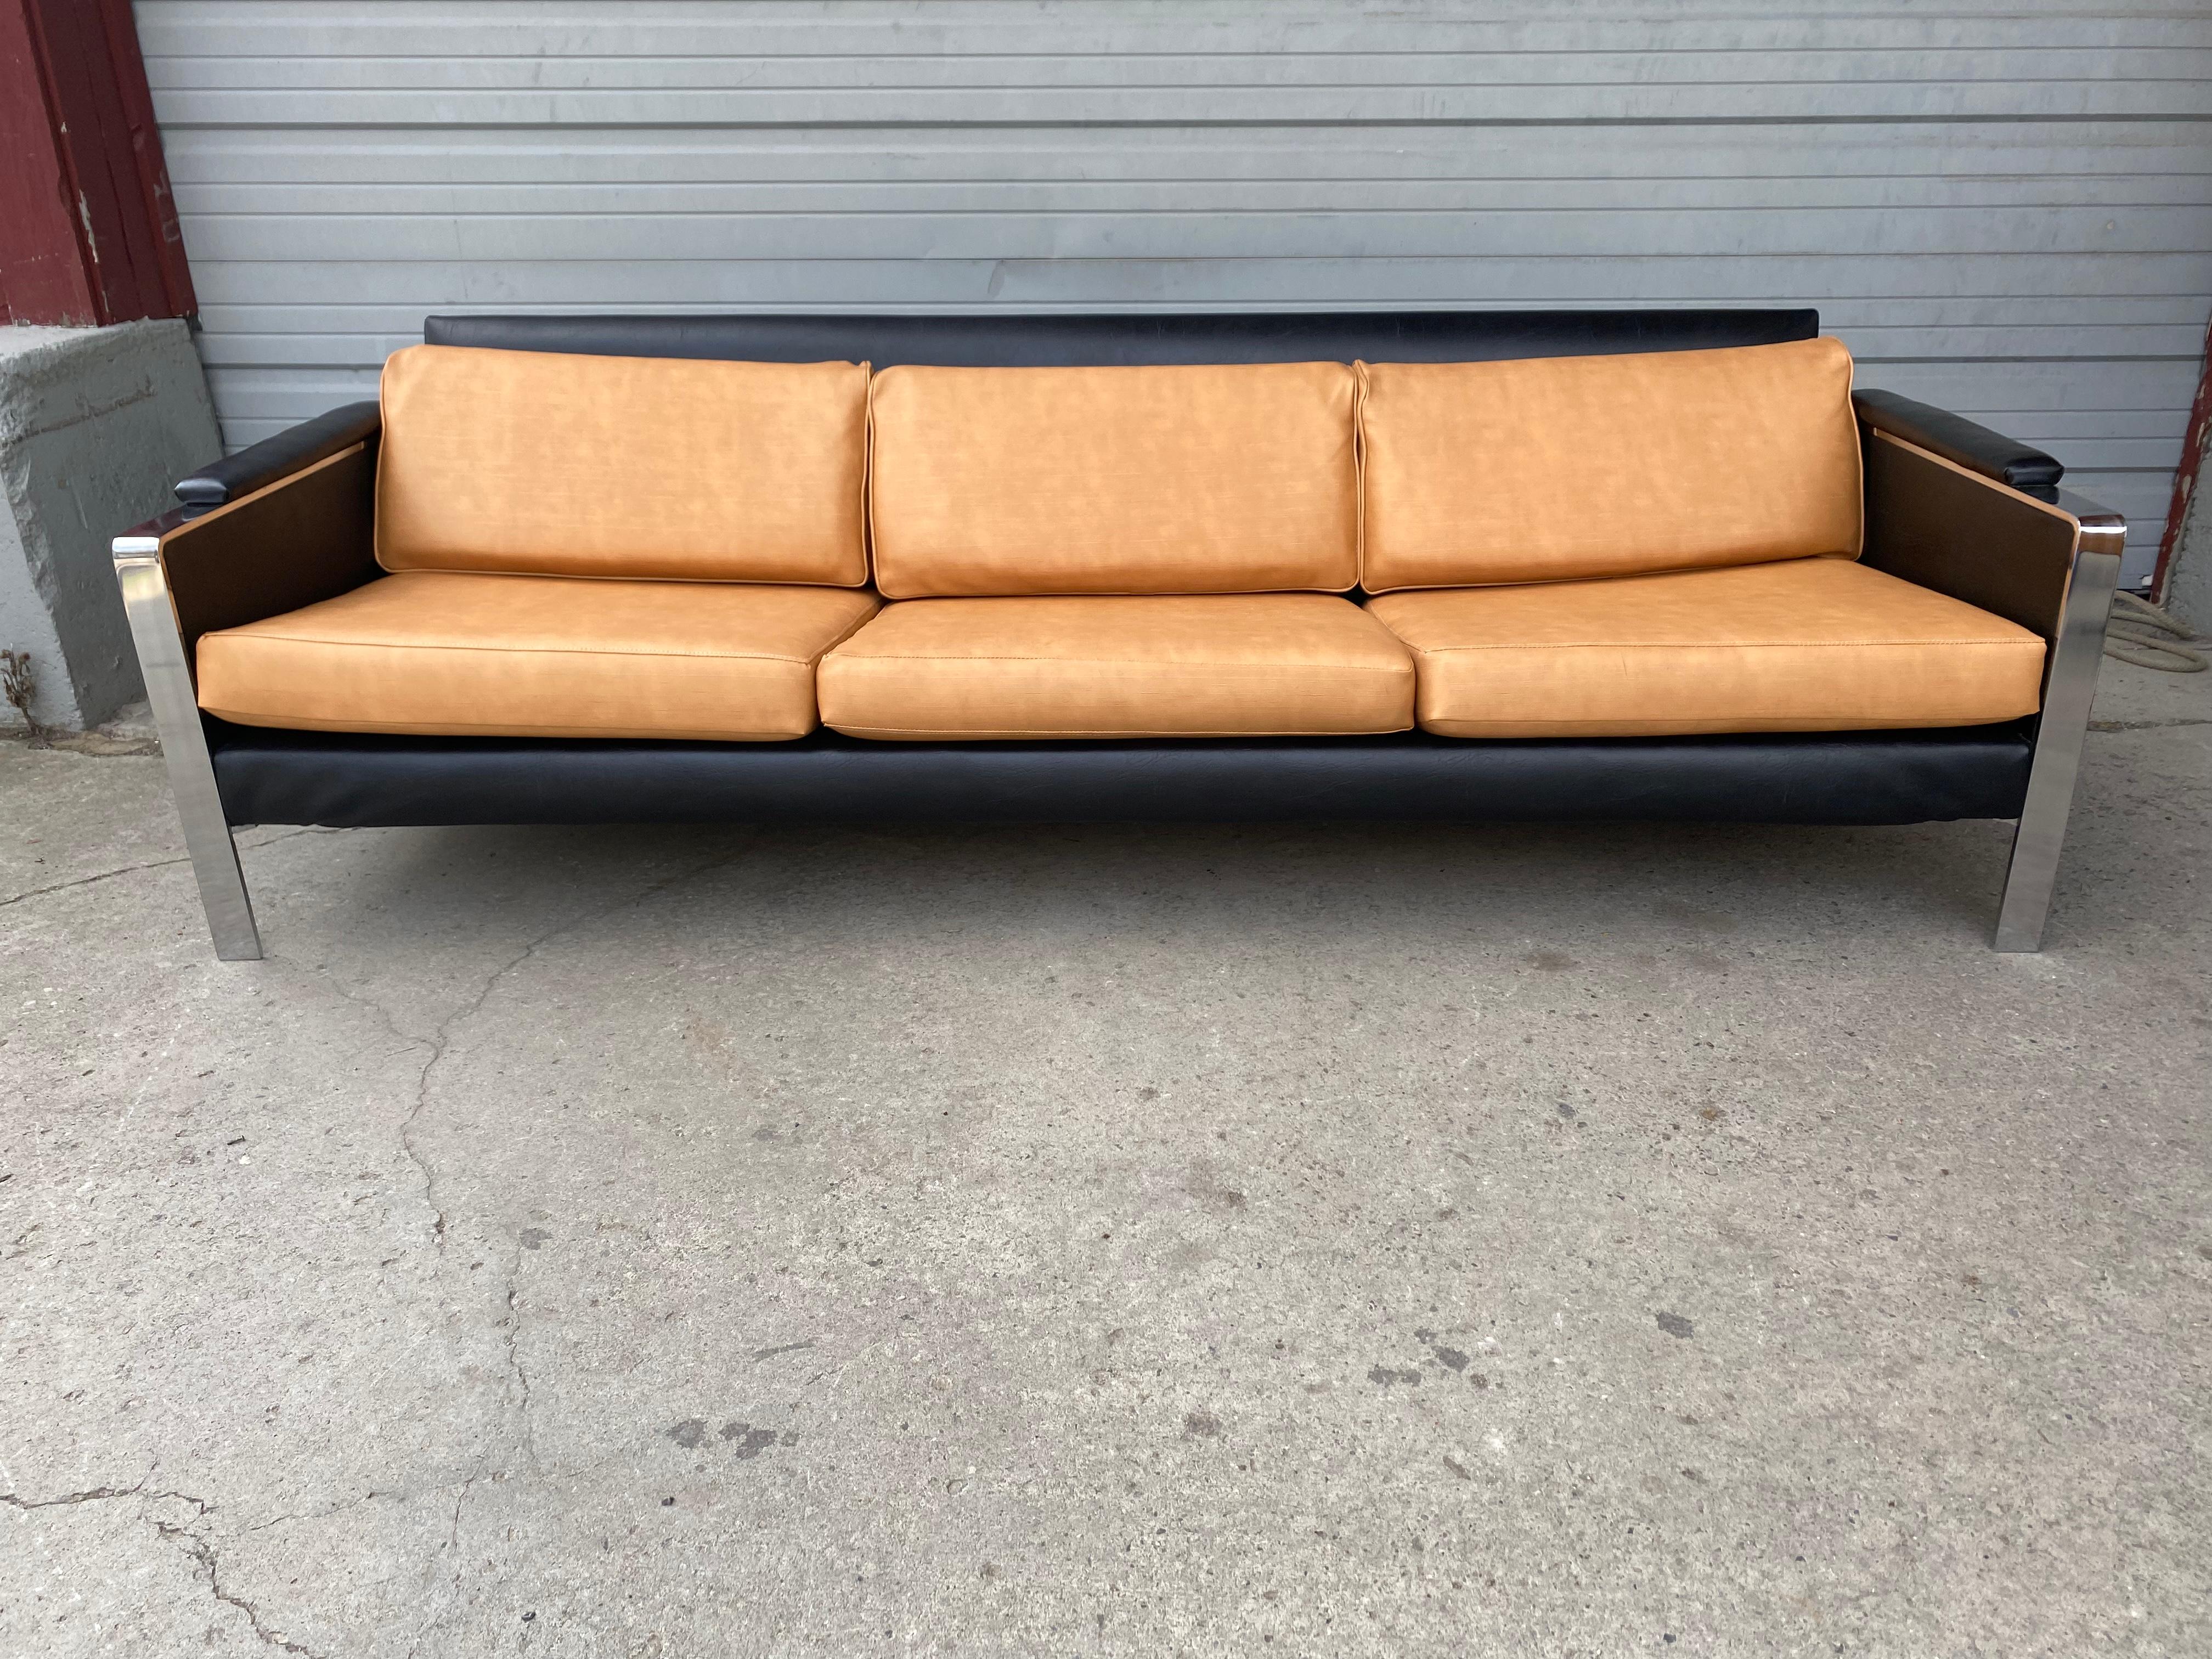 Classic Modernist Chromed Steel and Naugahyde Low Profile Sofa, Milo Baughman For Sale 6